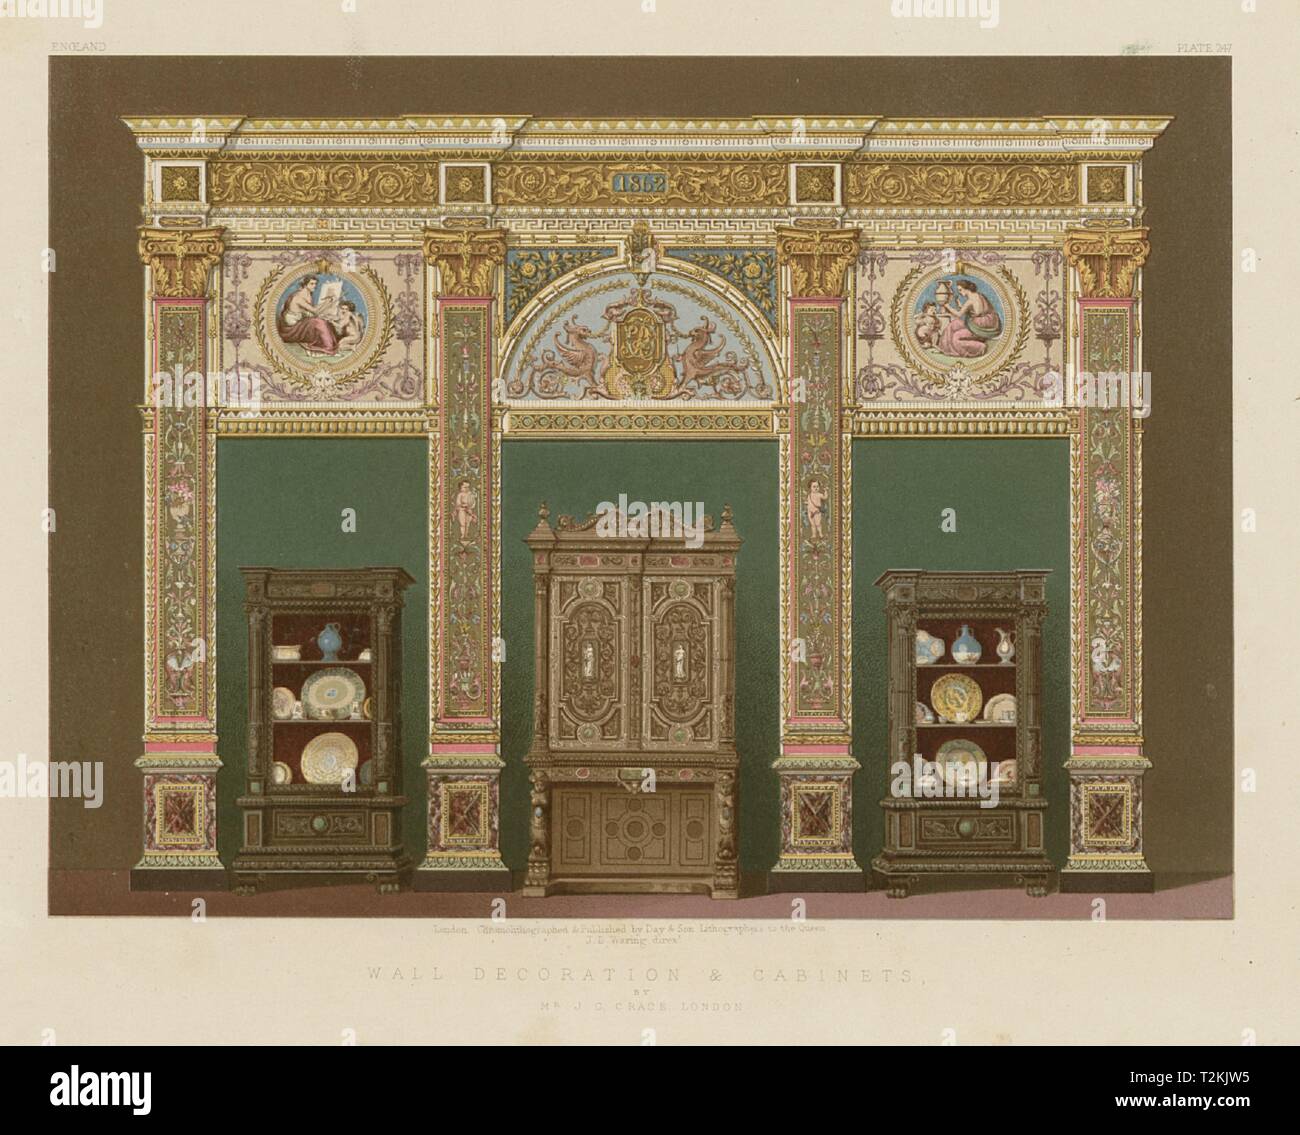 INTERNATIONAL EXHIBITION. Wall decoration & cabinets. J C Crace, London 1862 Stock Photo